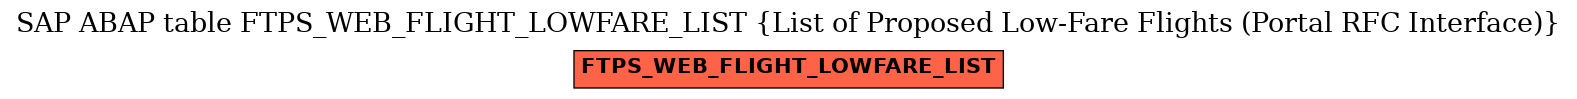 E-R Diagram for table FTPS_WEB_FLIGHT_LOWFARE_LIST (List of Proposed Low-Fare Flights (Portal RFC Interface))